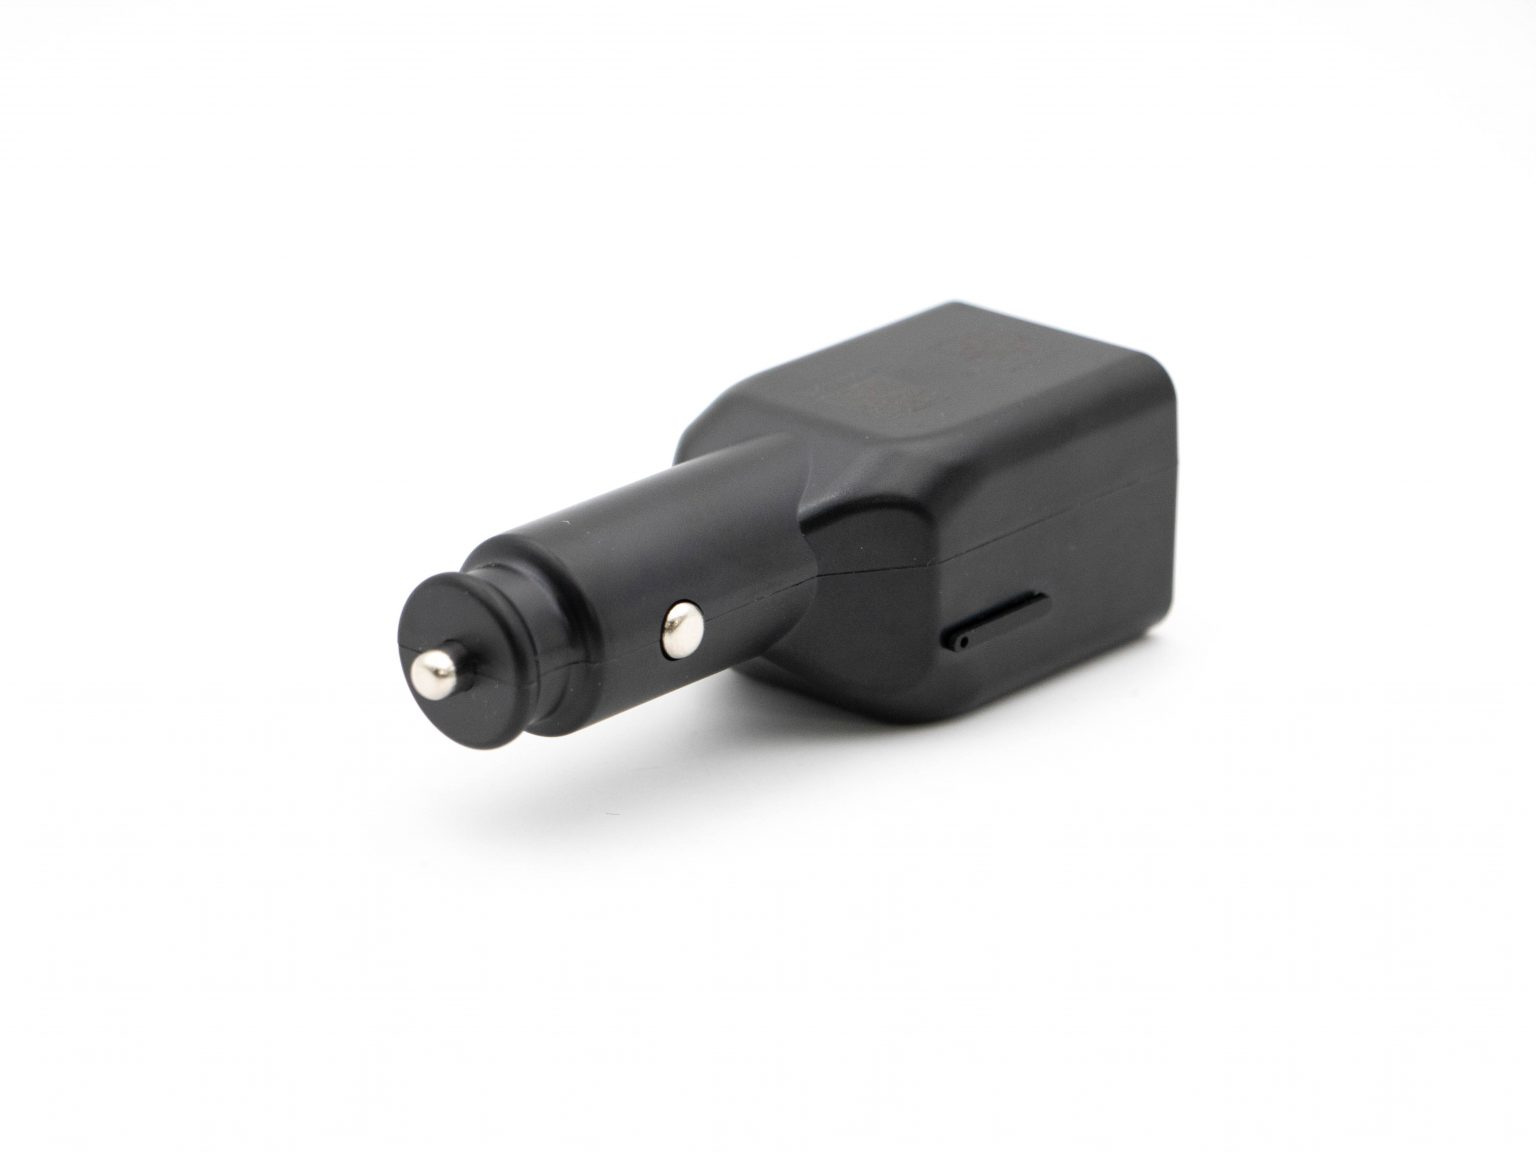 Black plug in vehicle tracking device